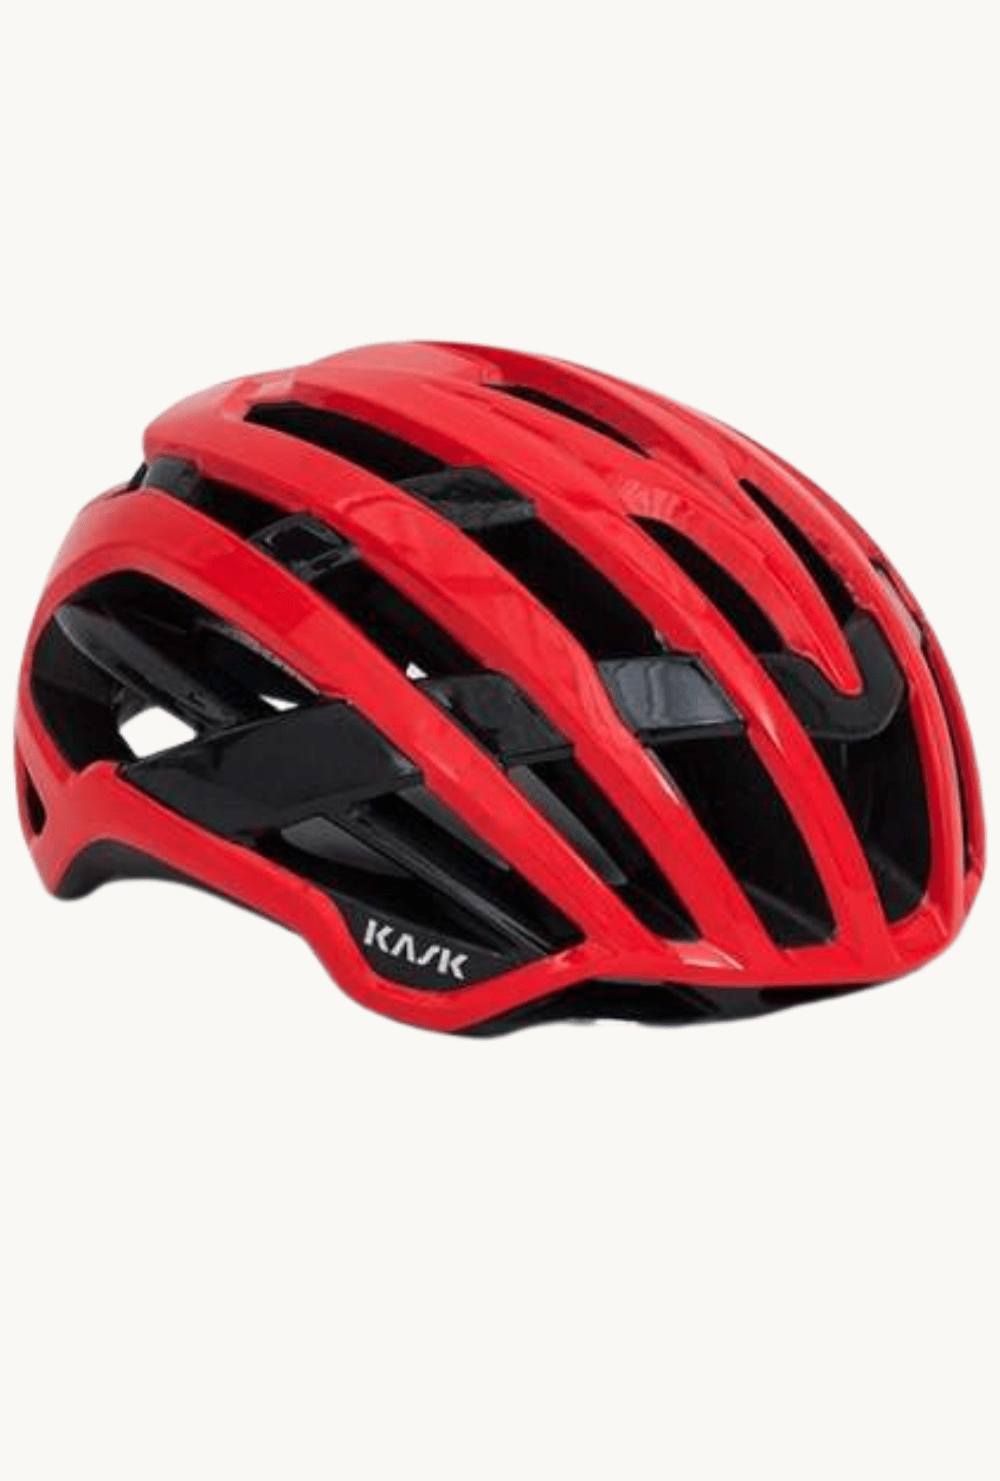 Helmet - Kask Valegro Redsmall / Red